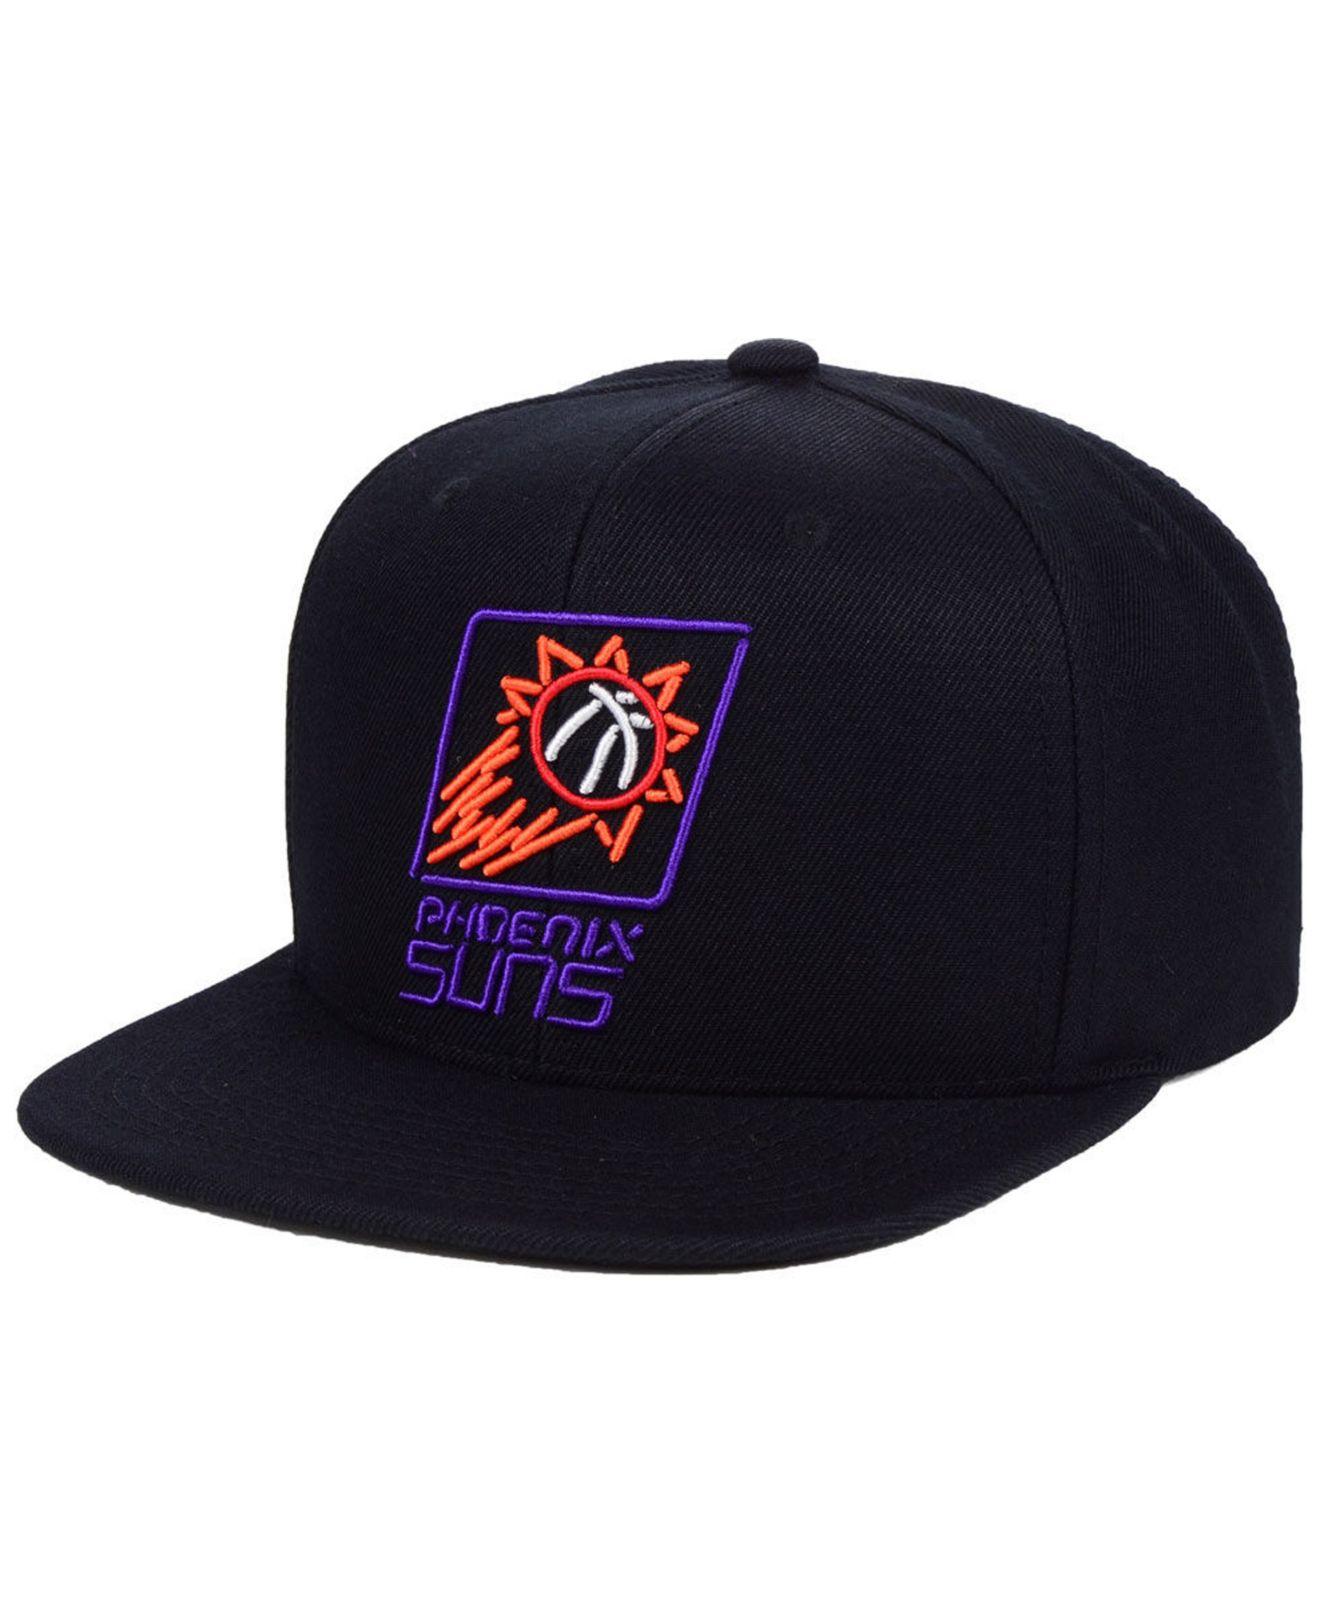 Mitchell & Ness Phoenix Suns Team Color Neon Snapback Cap in Black for Men